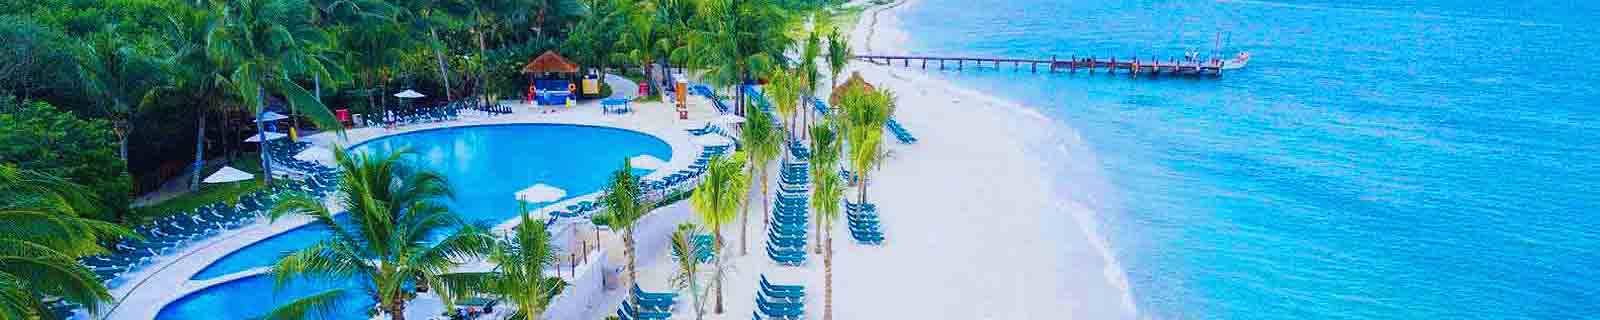 Photo of Occidental Grand Hotel Resort in Cozumel